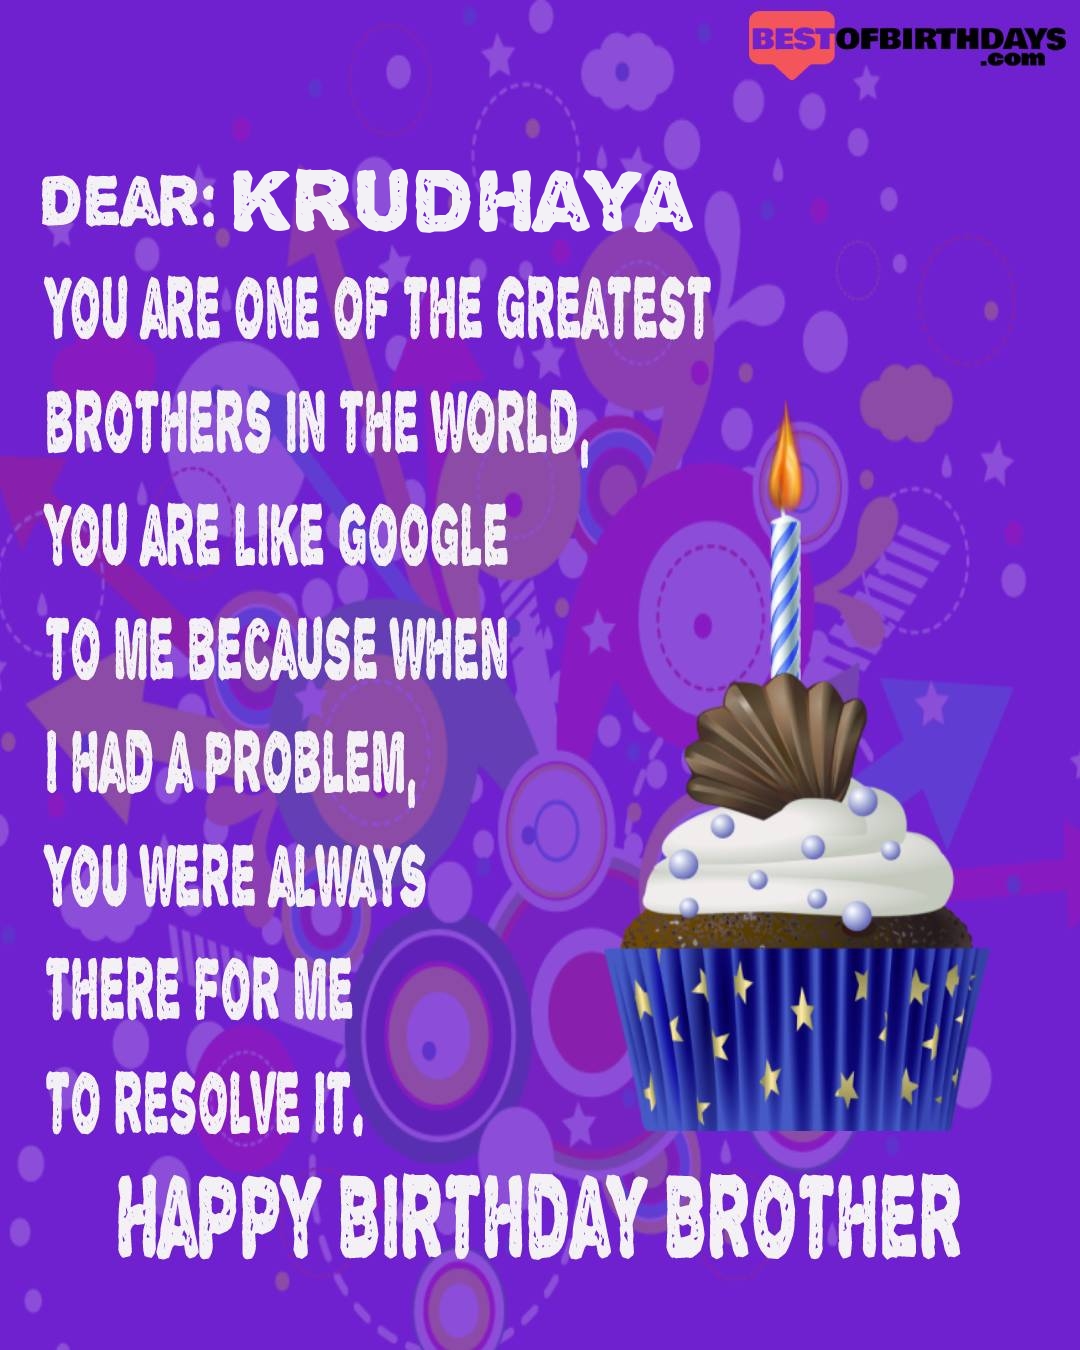 Happy birthday krudhaya bhai brother bro